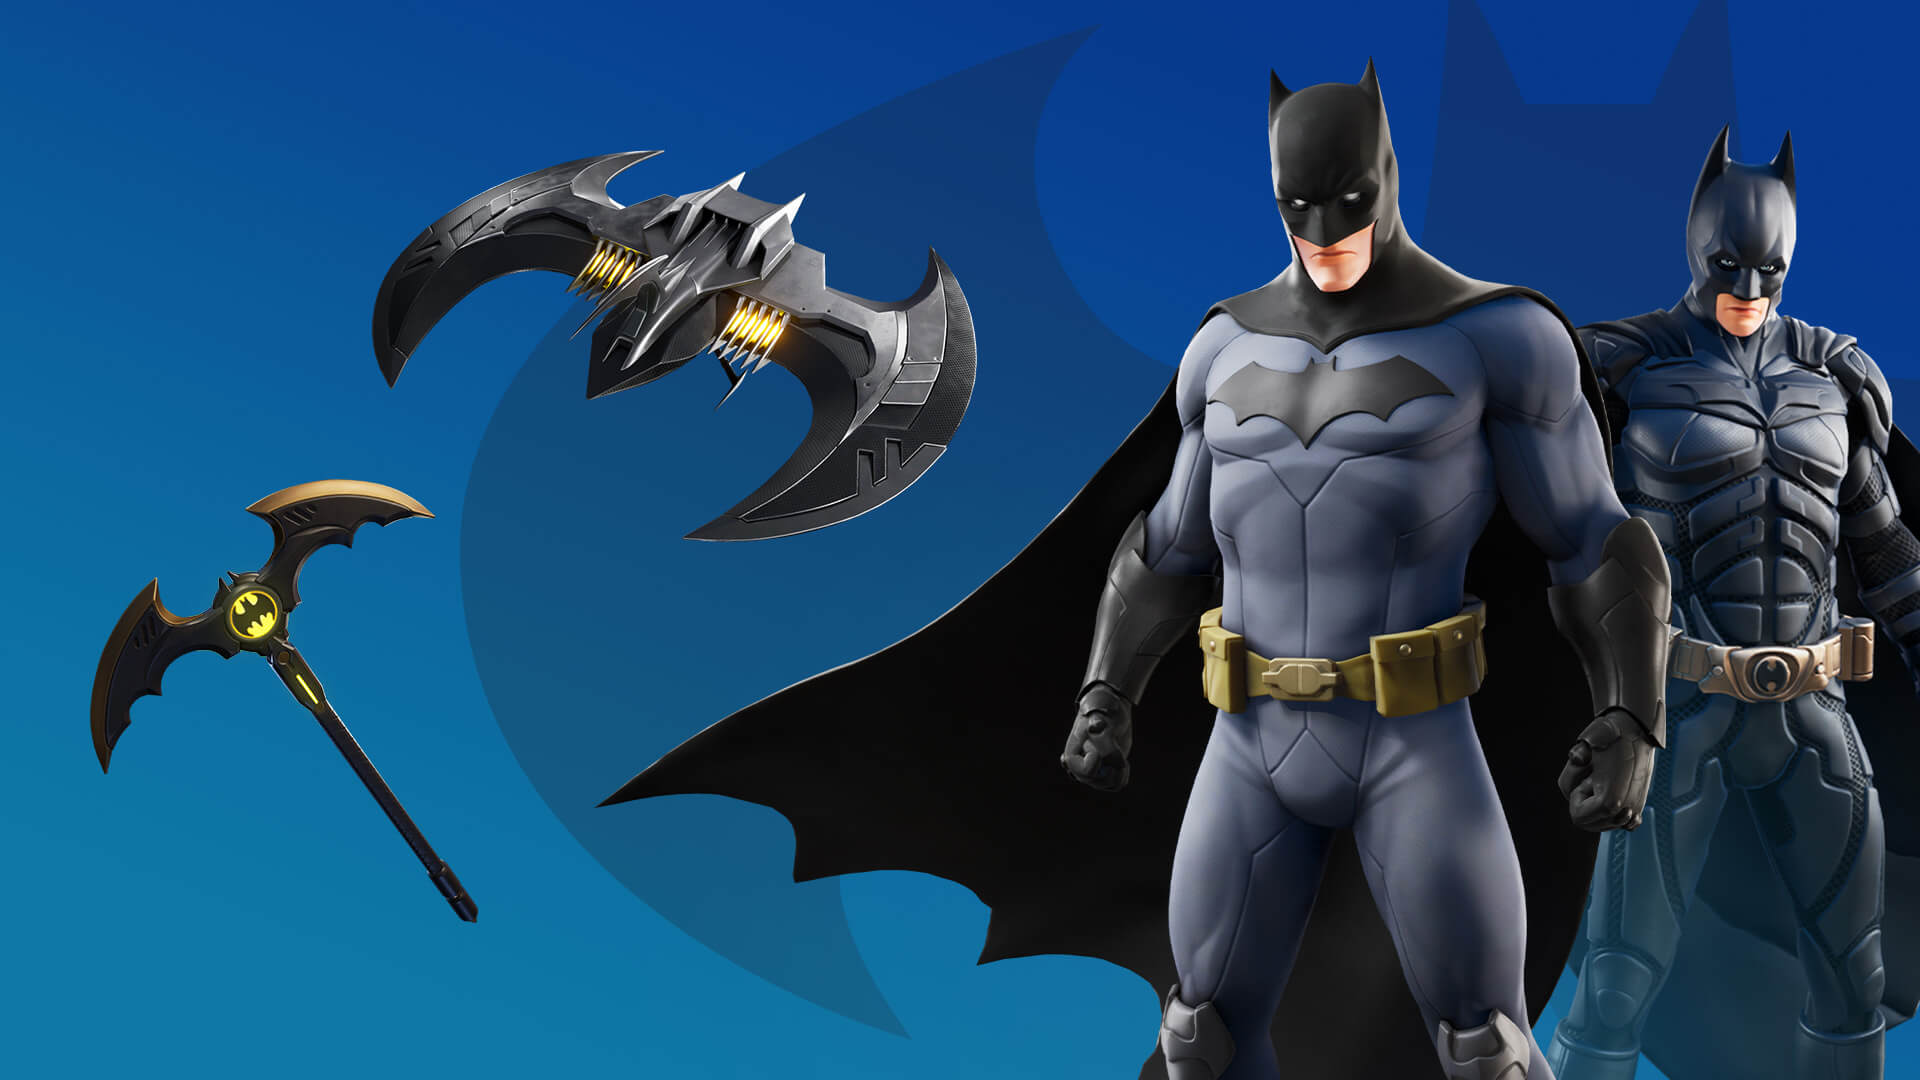 Batman returns to Fortnite with a Dose of Gotham City Heroism and Mayhem